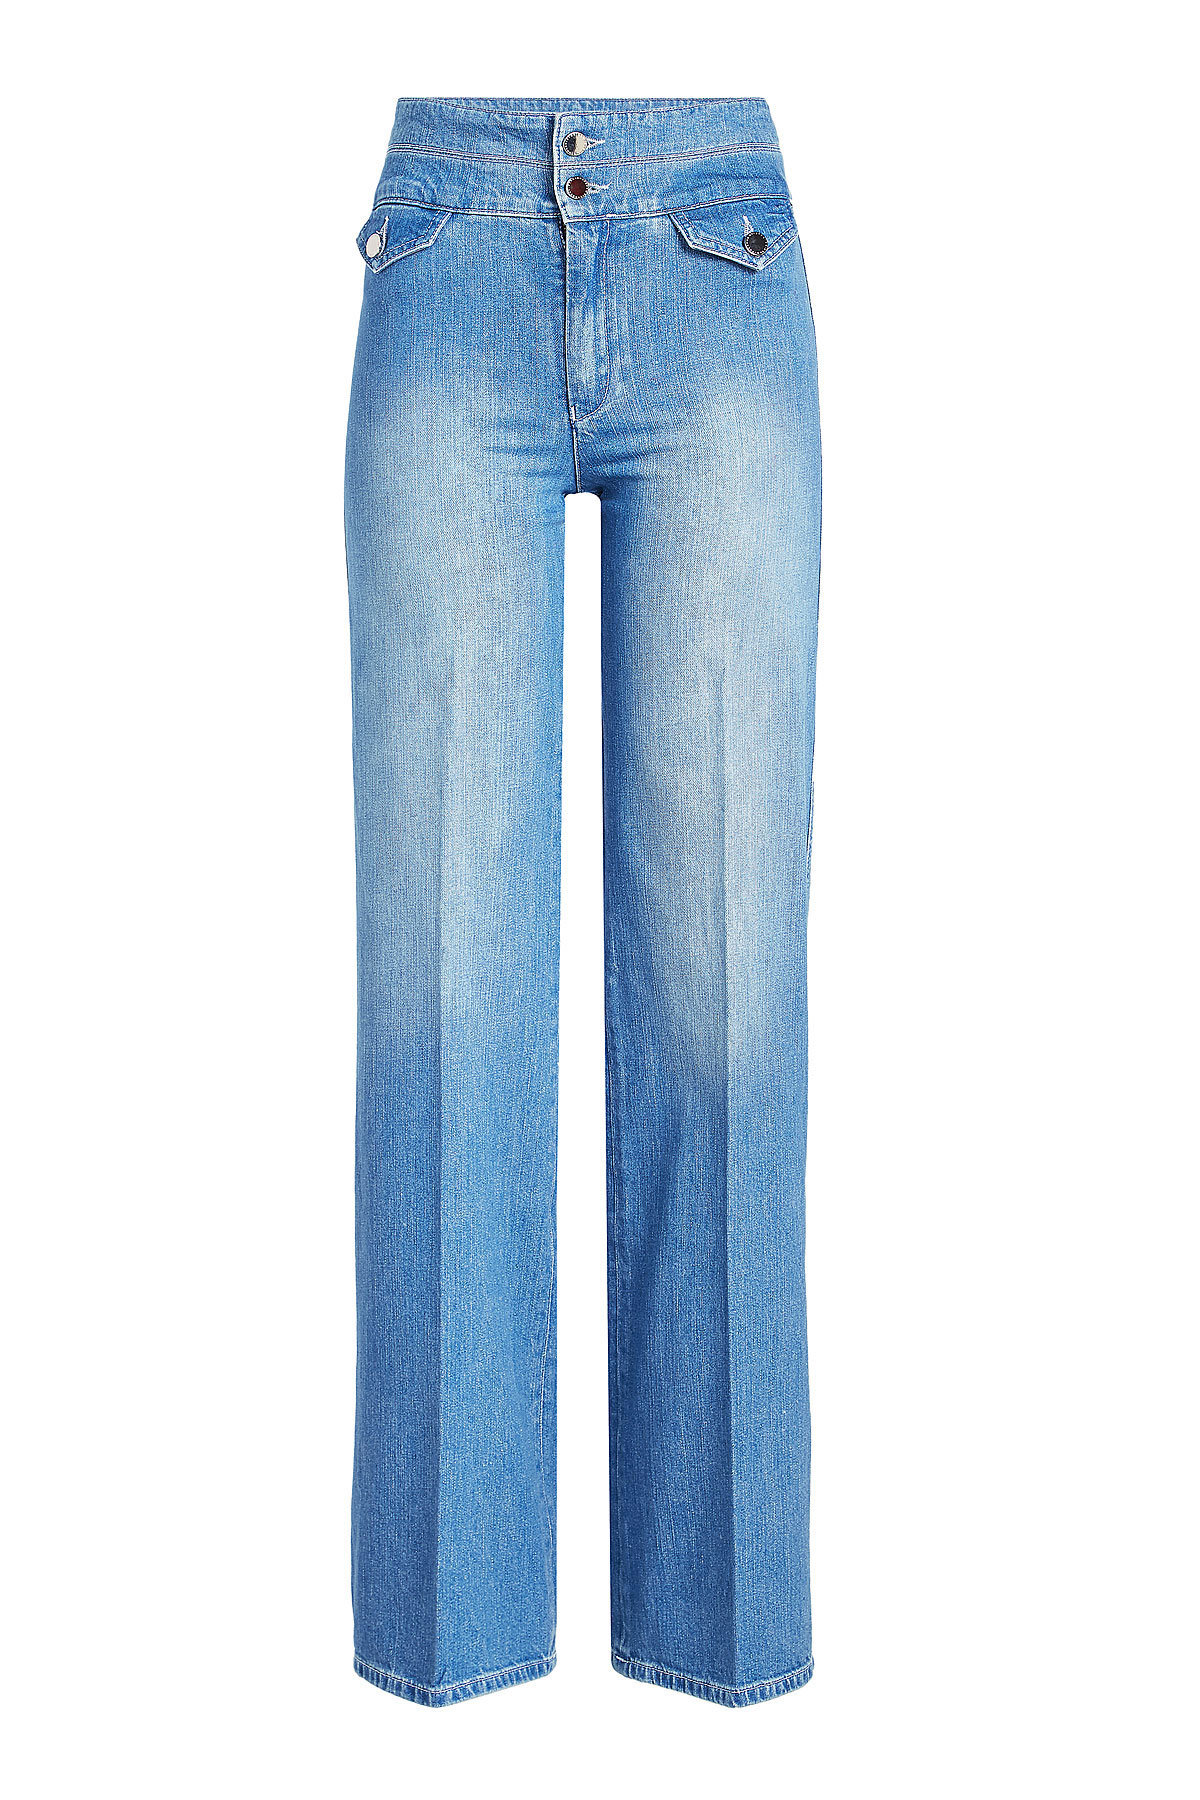 Victoria Beckham - 70s Wide Leg Jeans